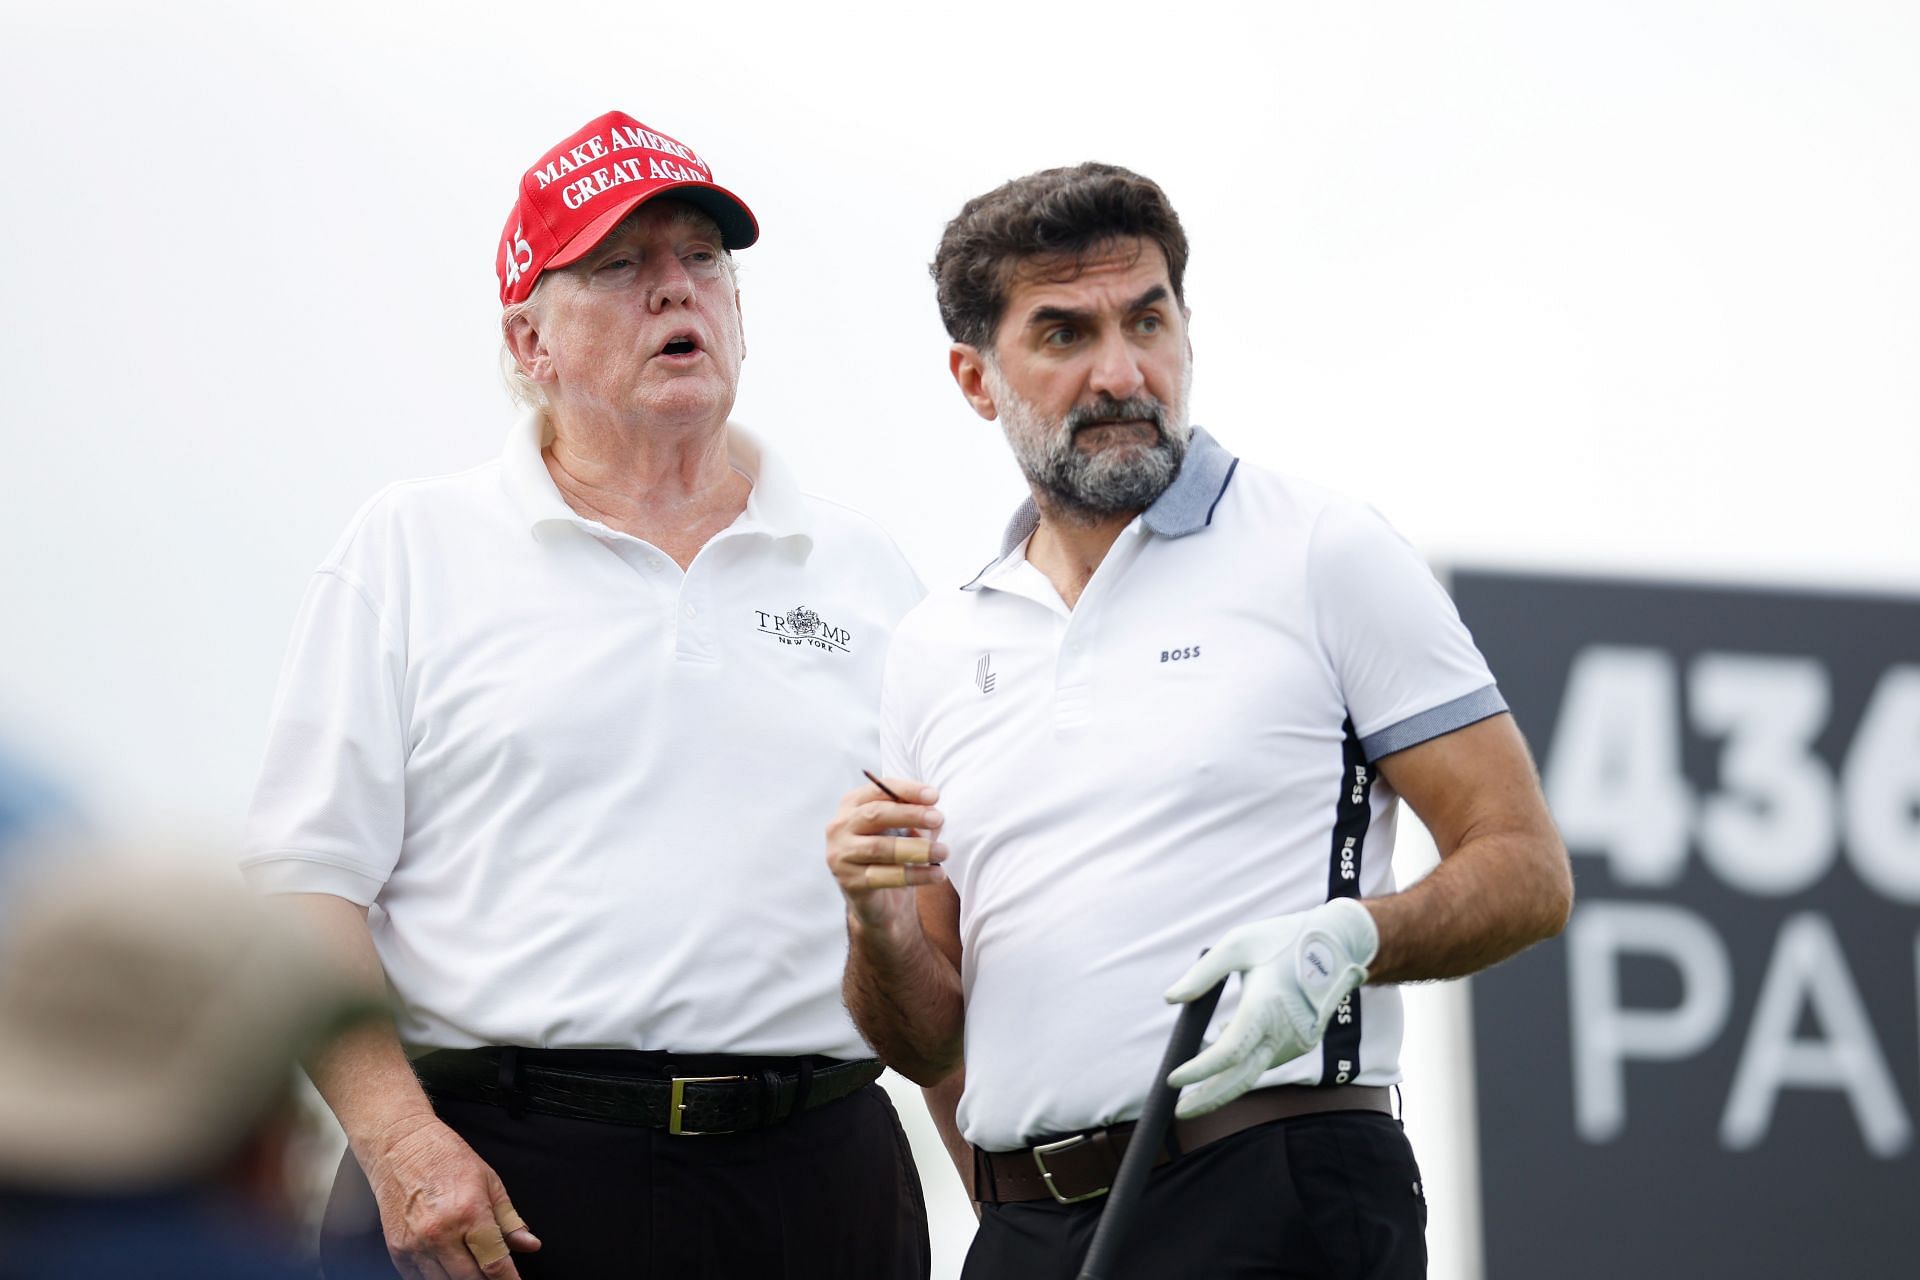 Former U.S. President Donald Trump and Yasir al-Rumayyan, head of the sovereign wealth fund of Saudi Arabia, at the 2022 LIV Golf Invitational (Image via Getty).